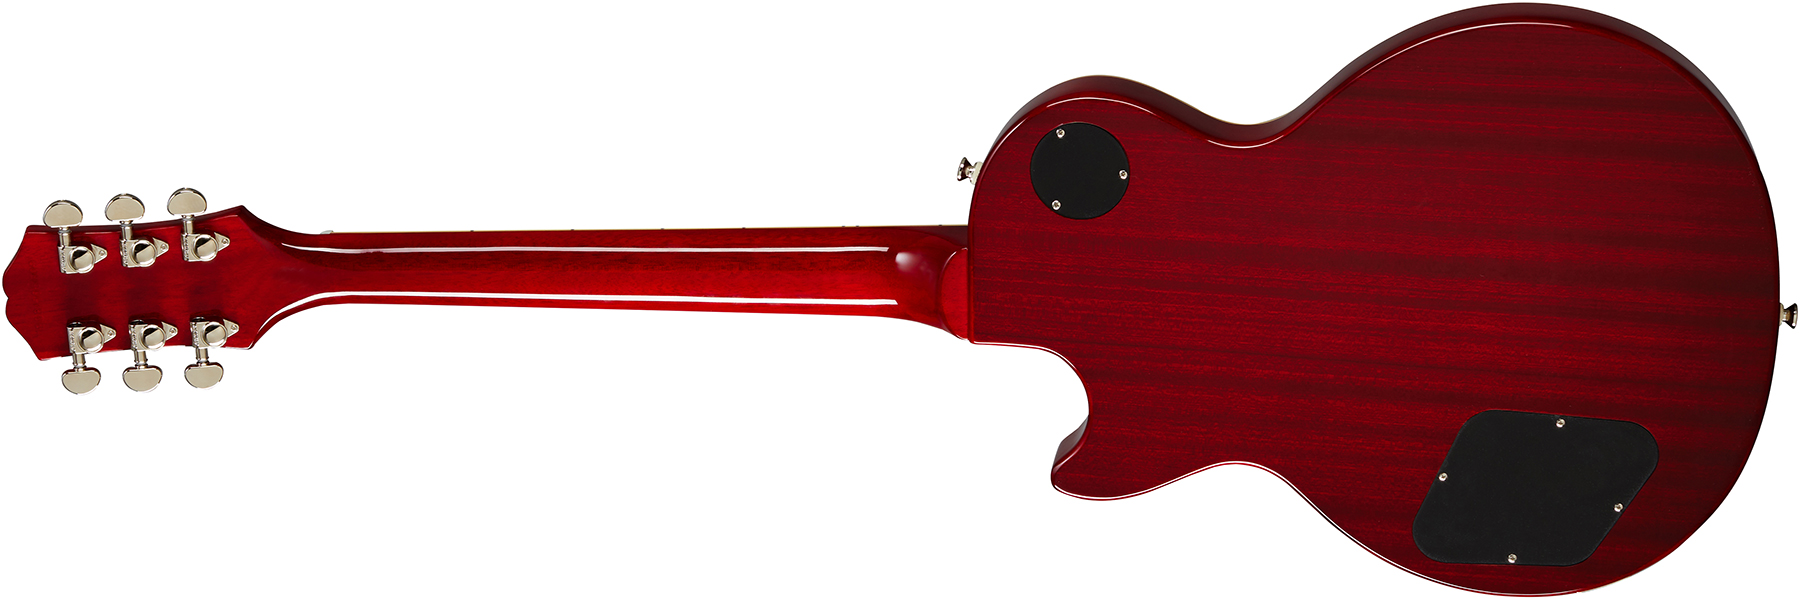 Epiphone Les Paul Classic Modern 2020 2h Ht Lau - Heritage Cherry Sunburst - Single cut electric guitar - Variation 1